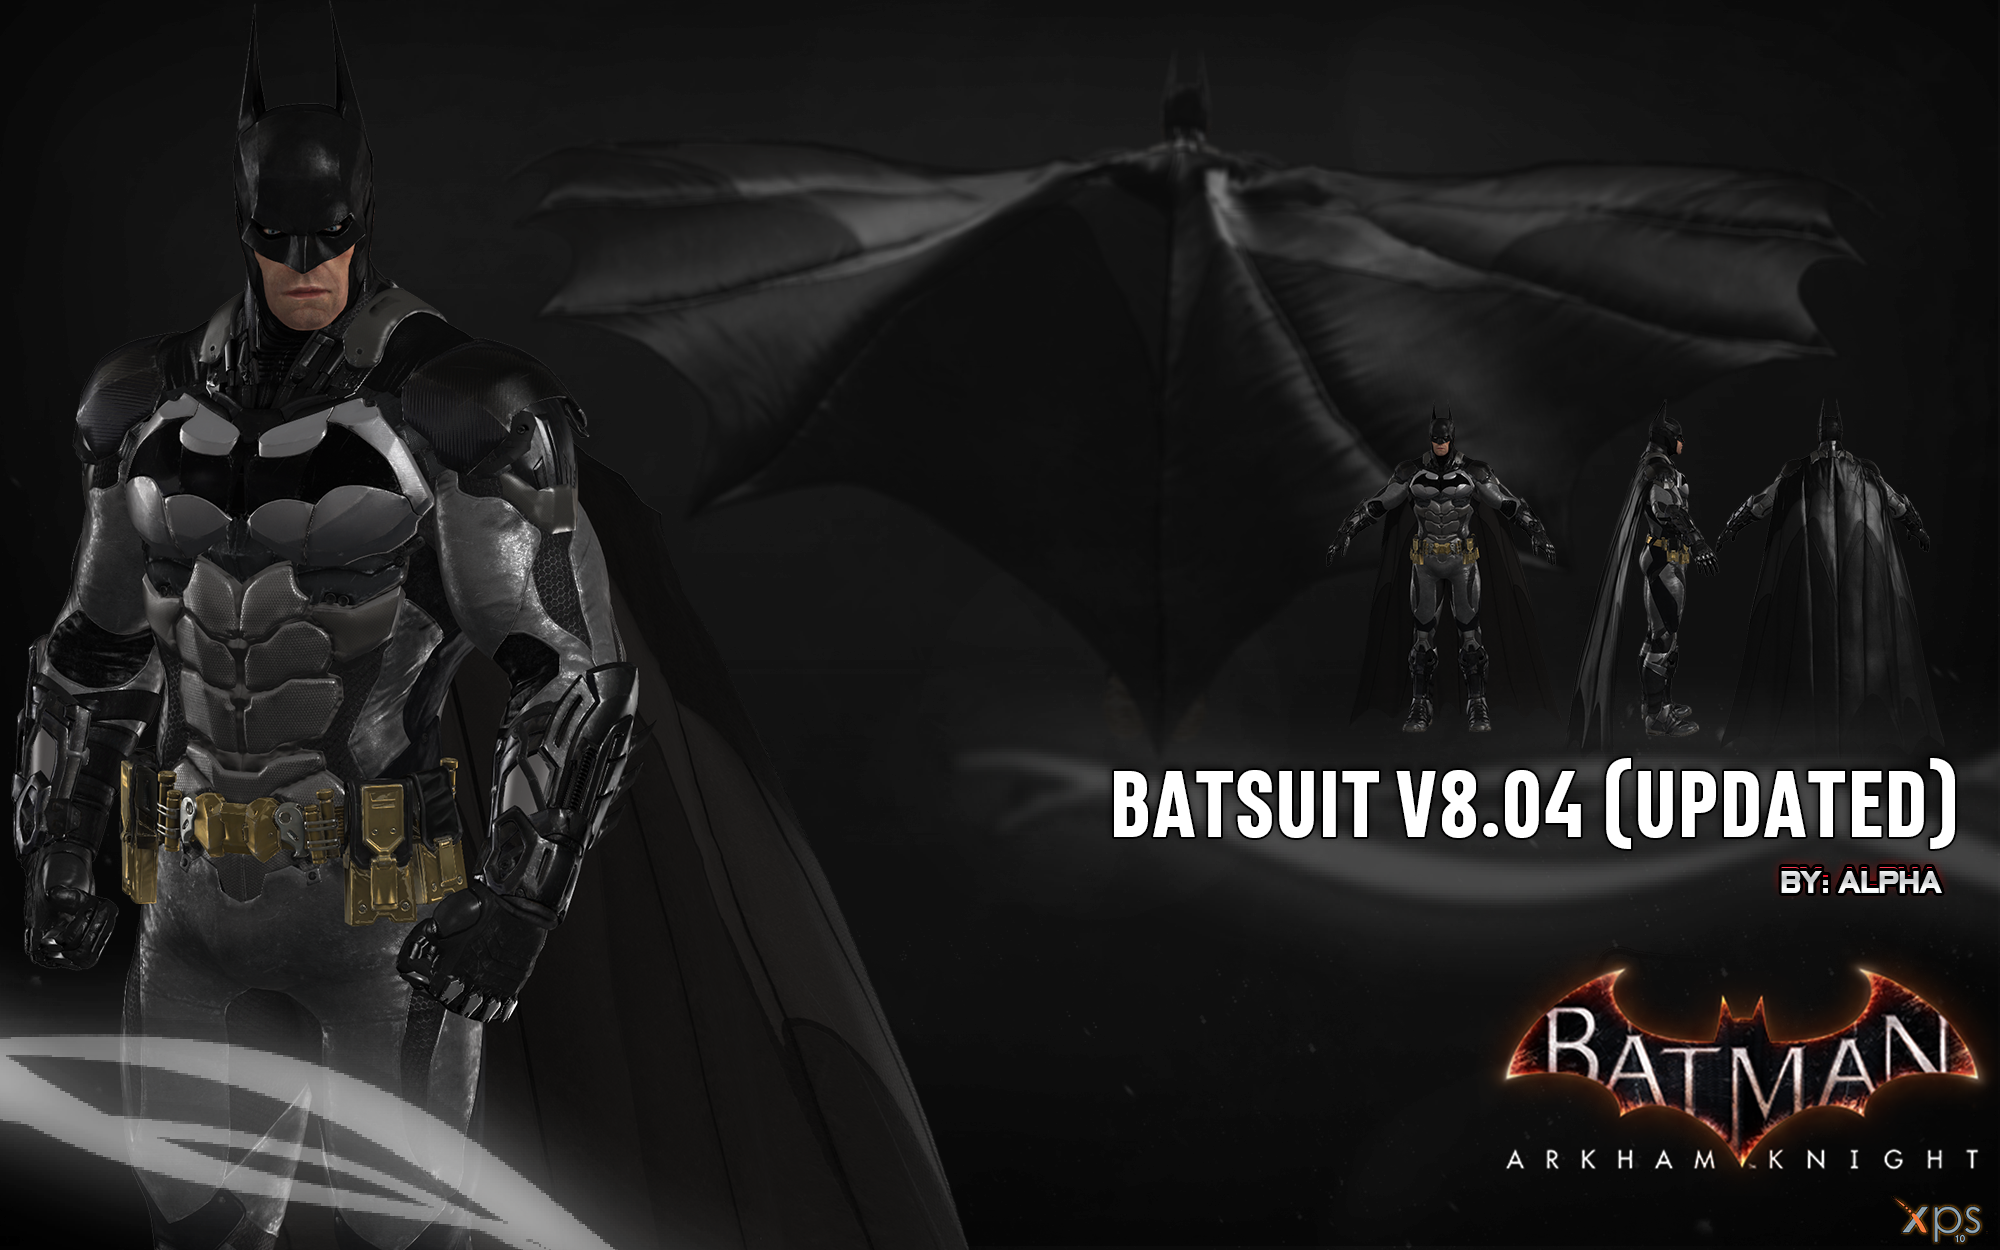 Nexus batman. Batman Arkham Knight Бэткостюм v8.05. Batsuit v8.04. Batman Arkham Origins Batsuit. Batman Arkham Knight Batsuit v8.04.